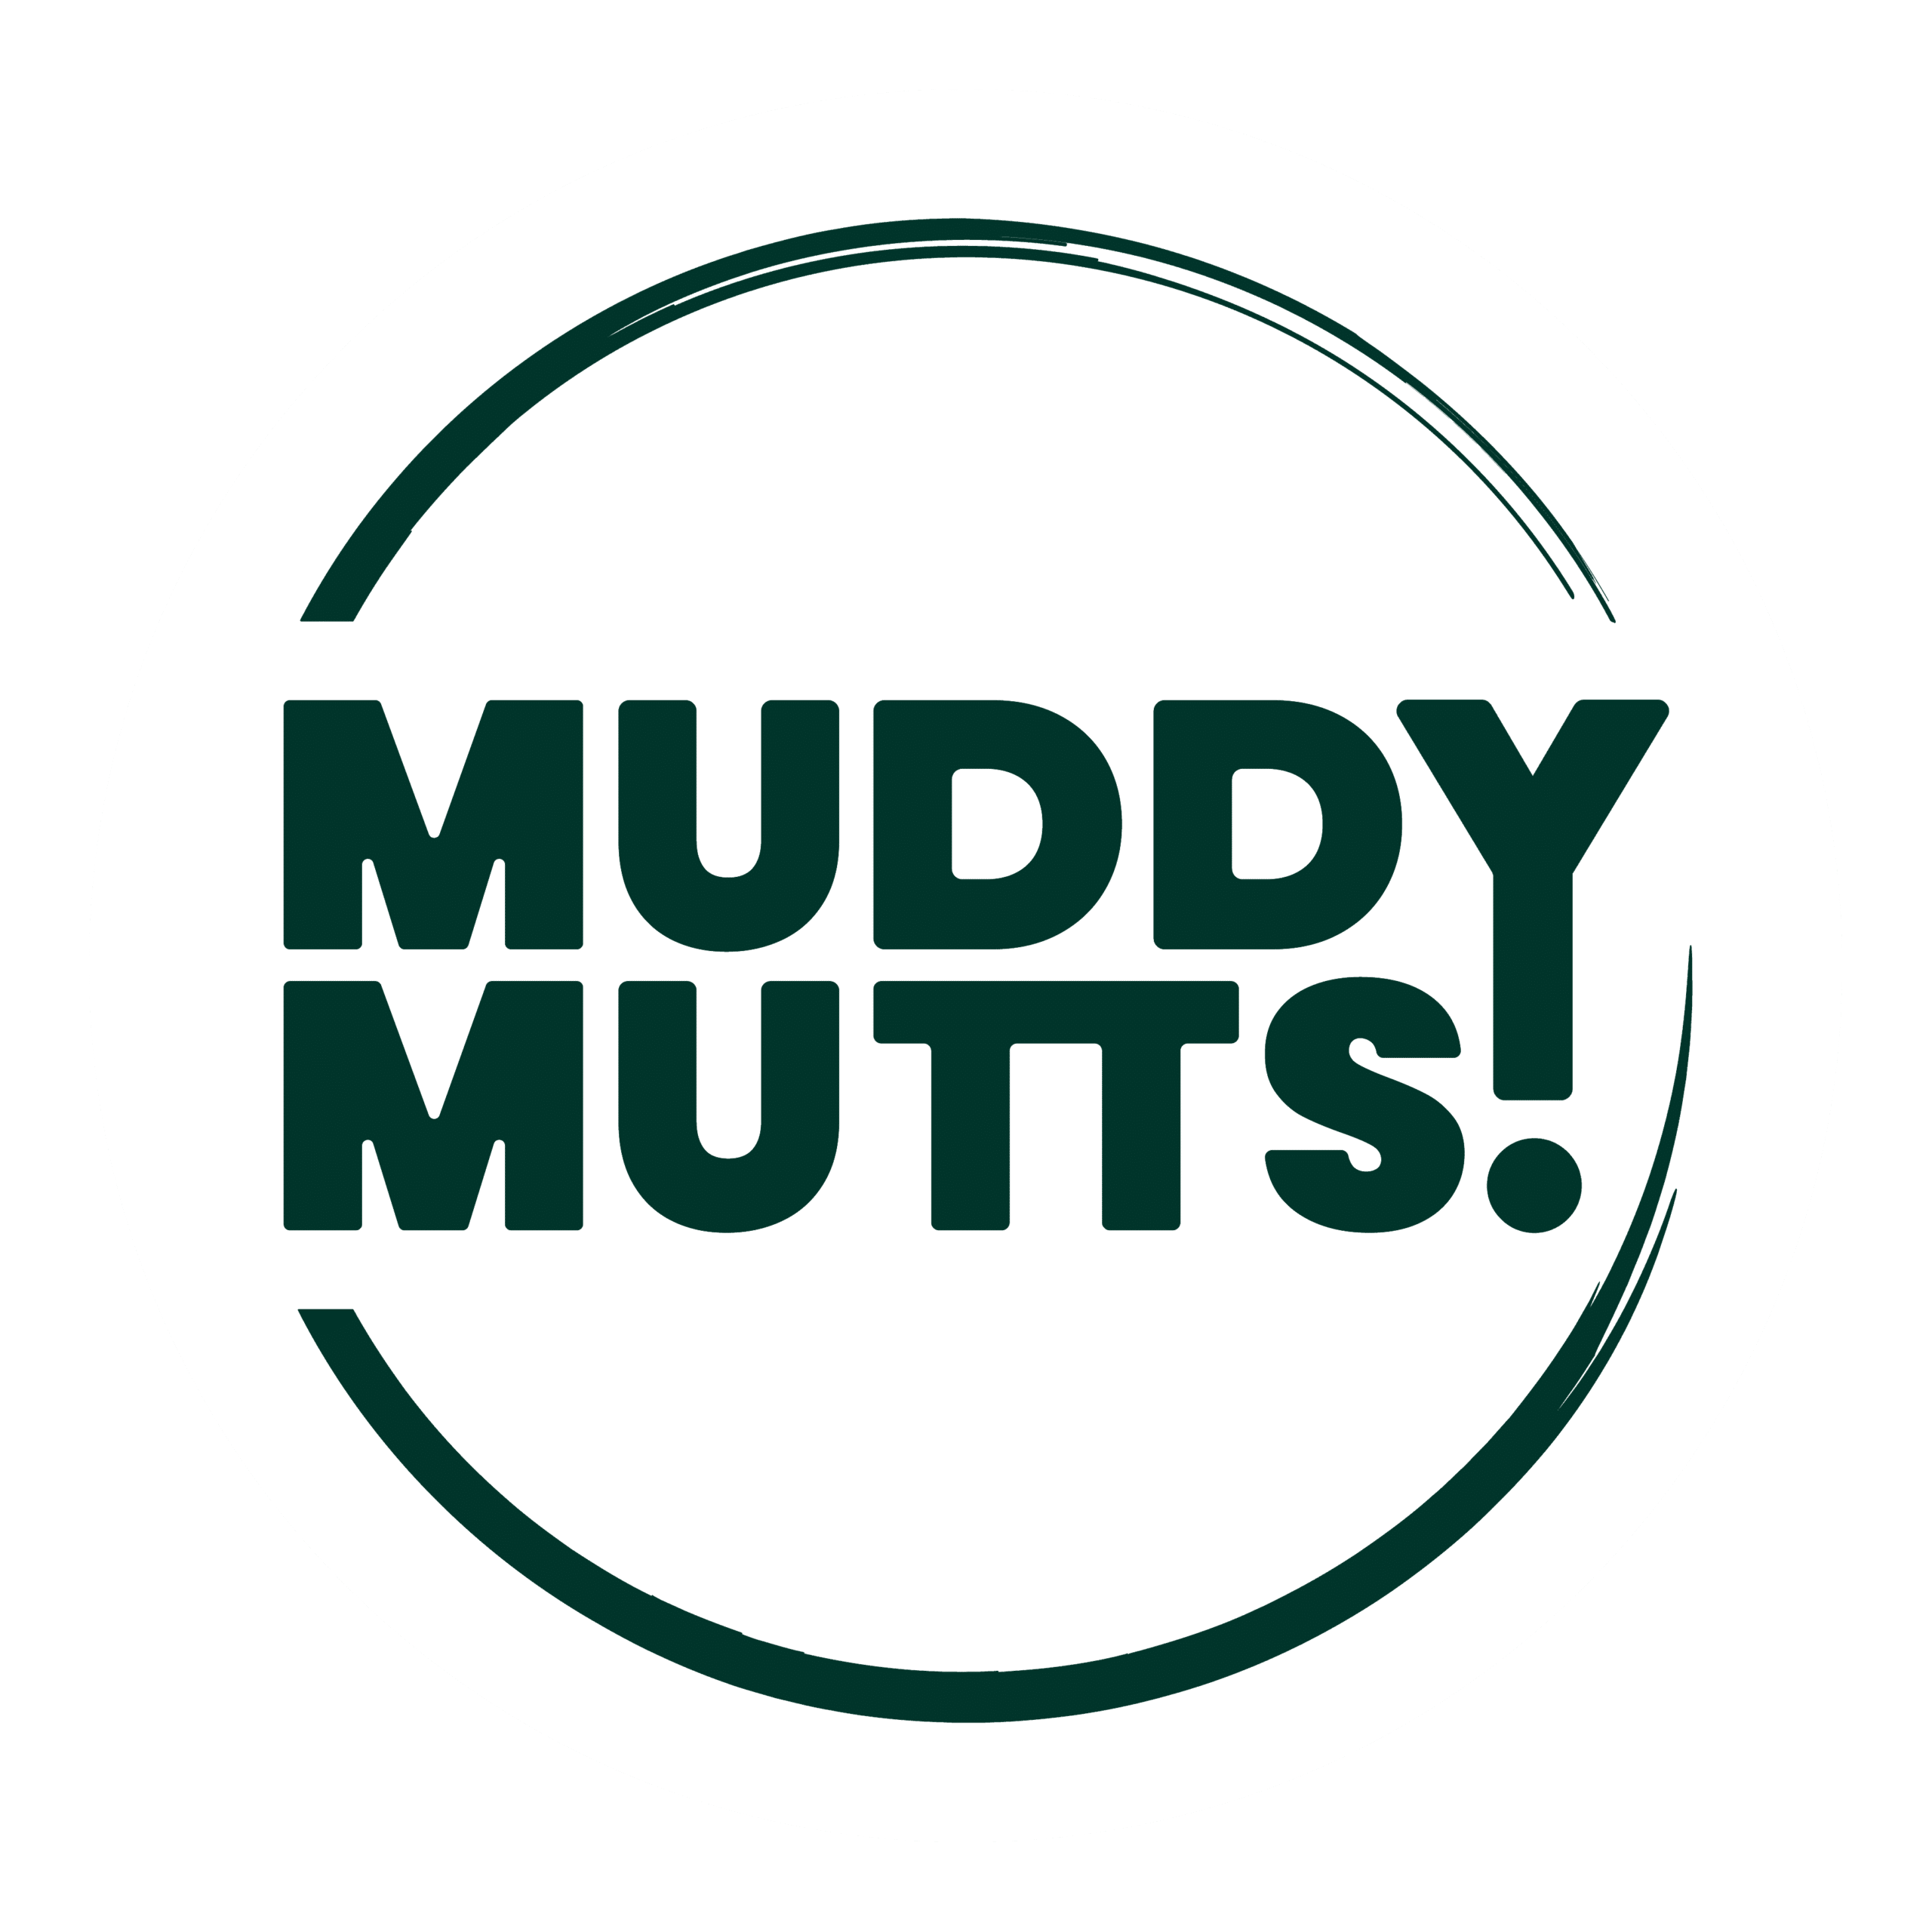 Muddy Mutts White and Green Logo